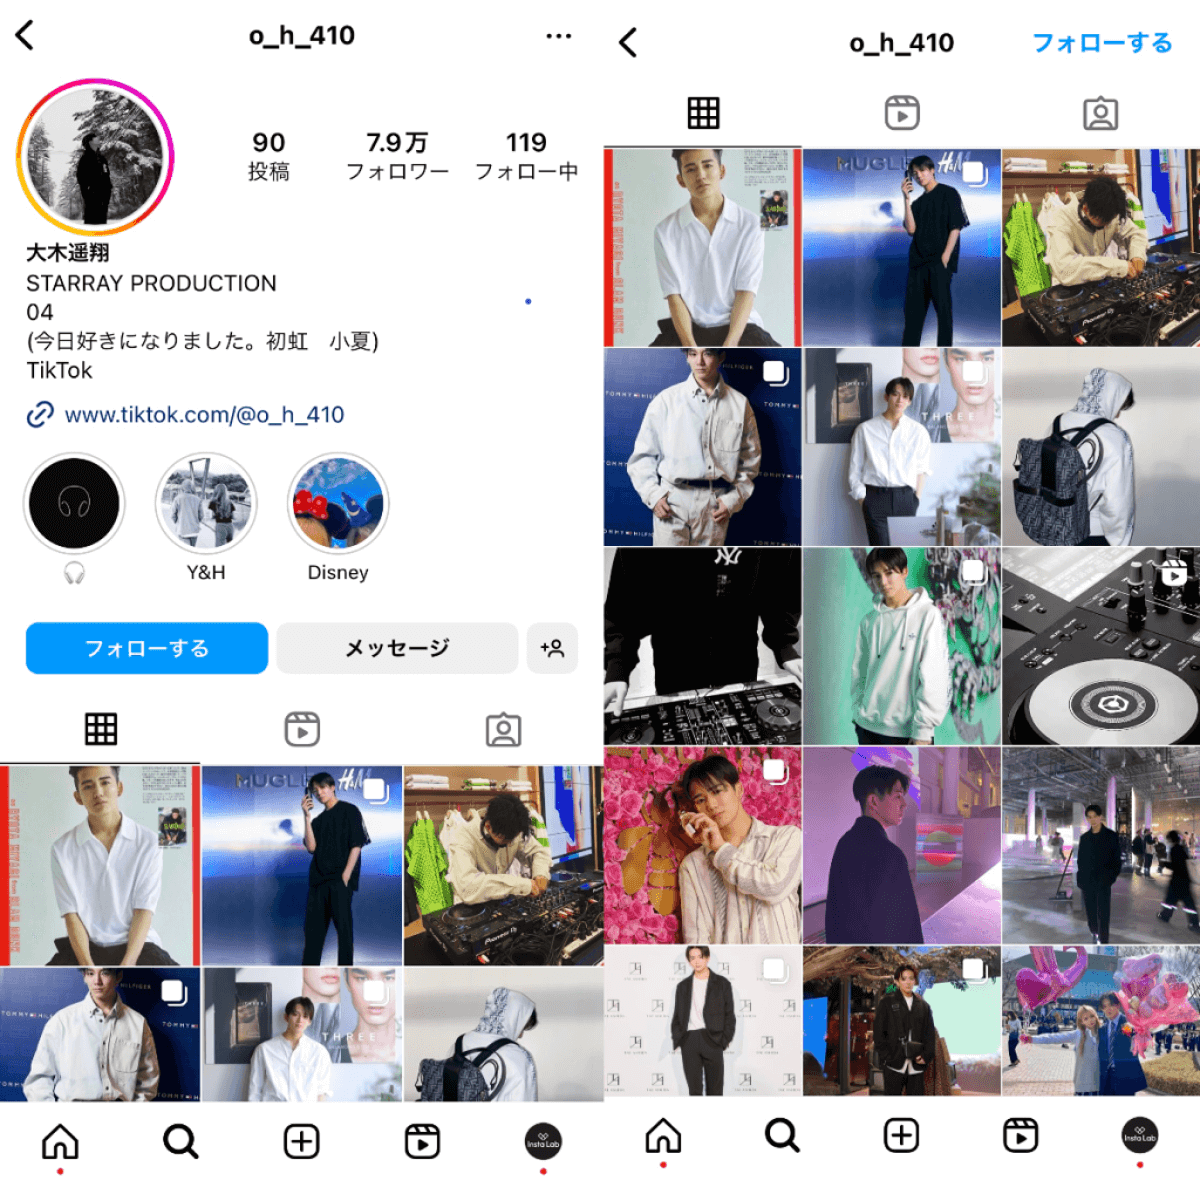 instagram-account-o-h-410